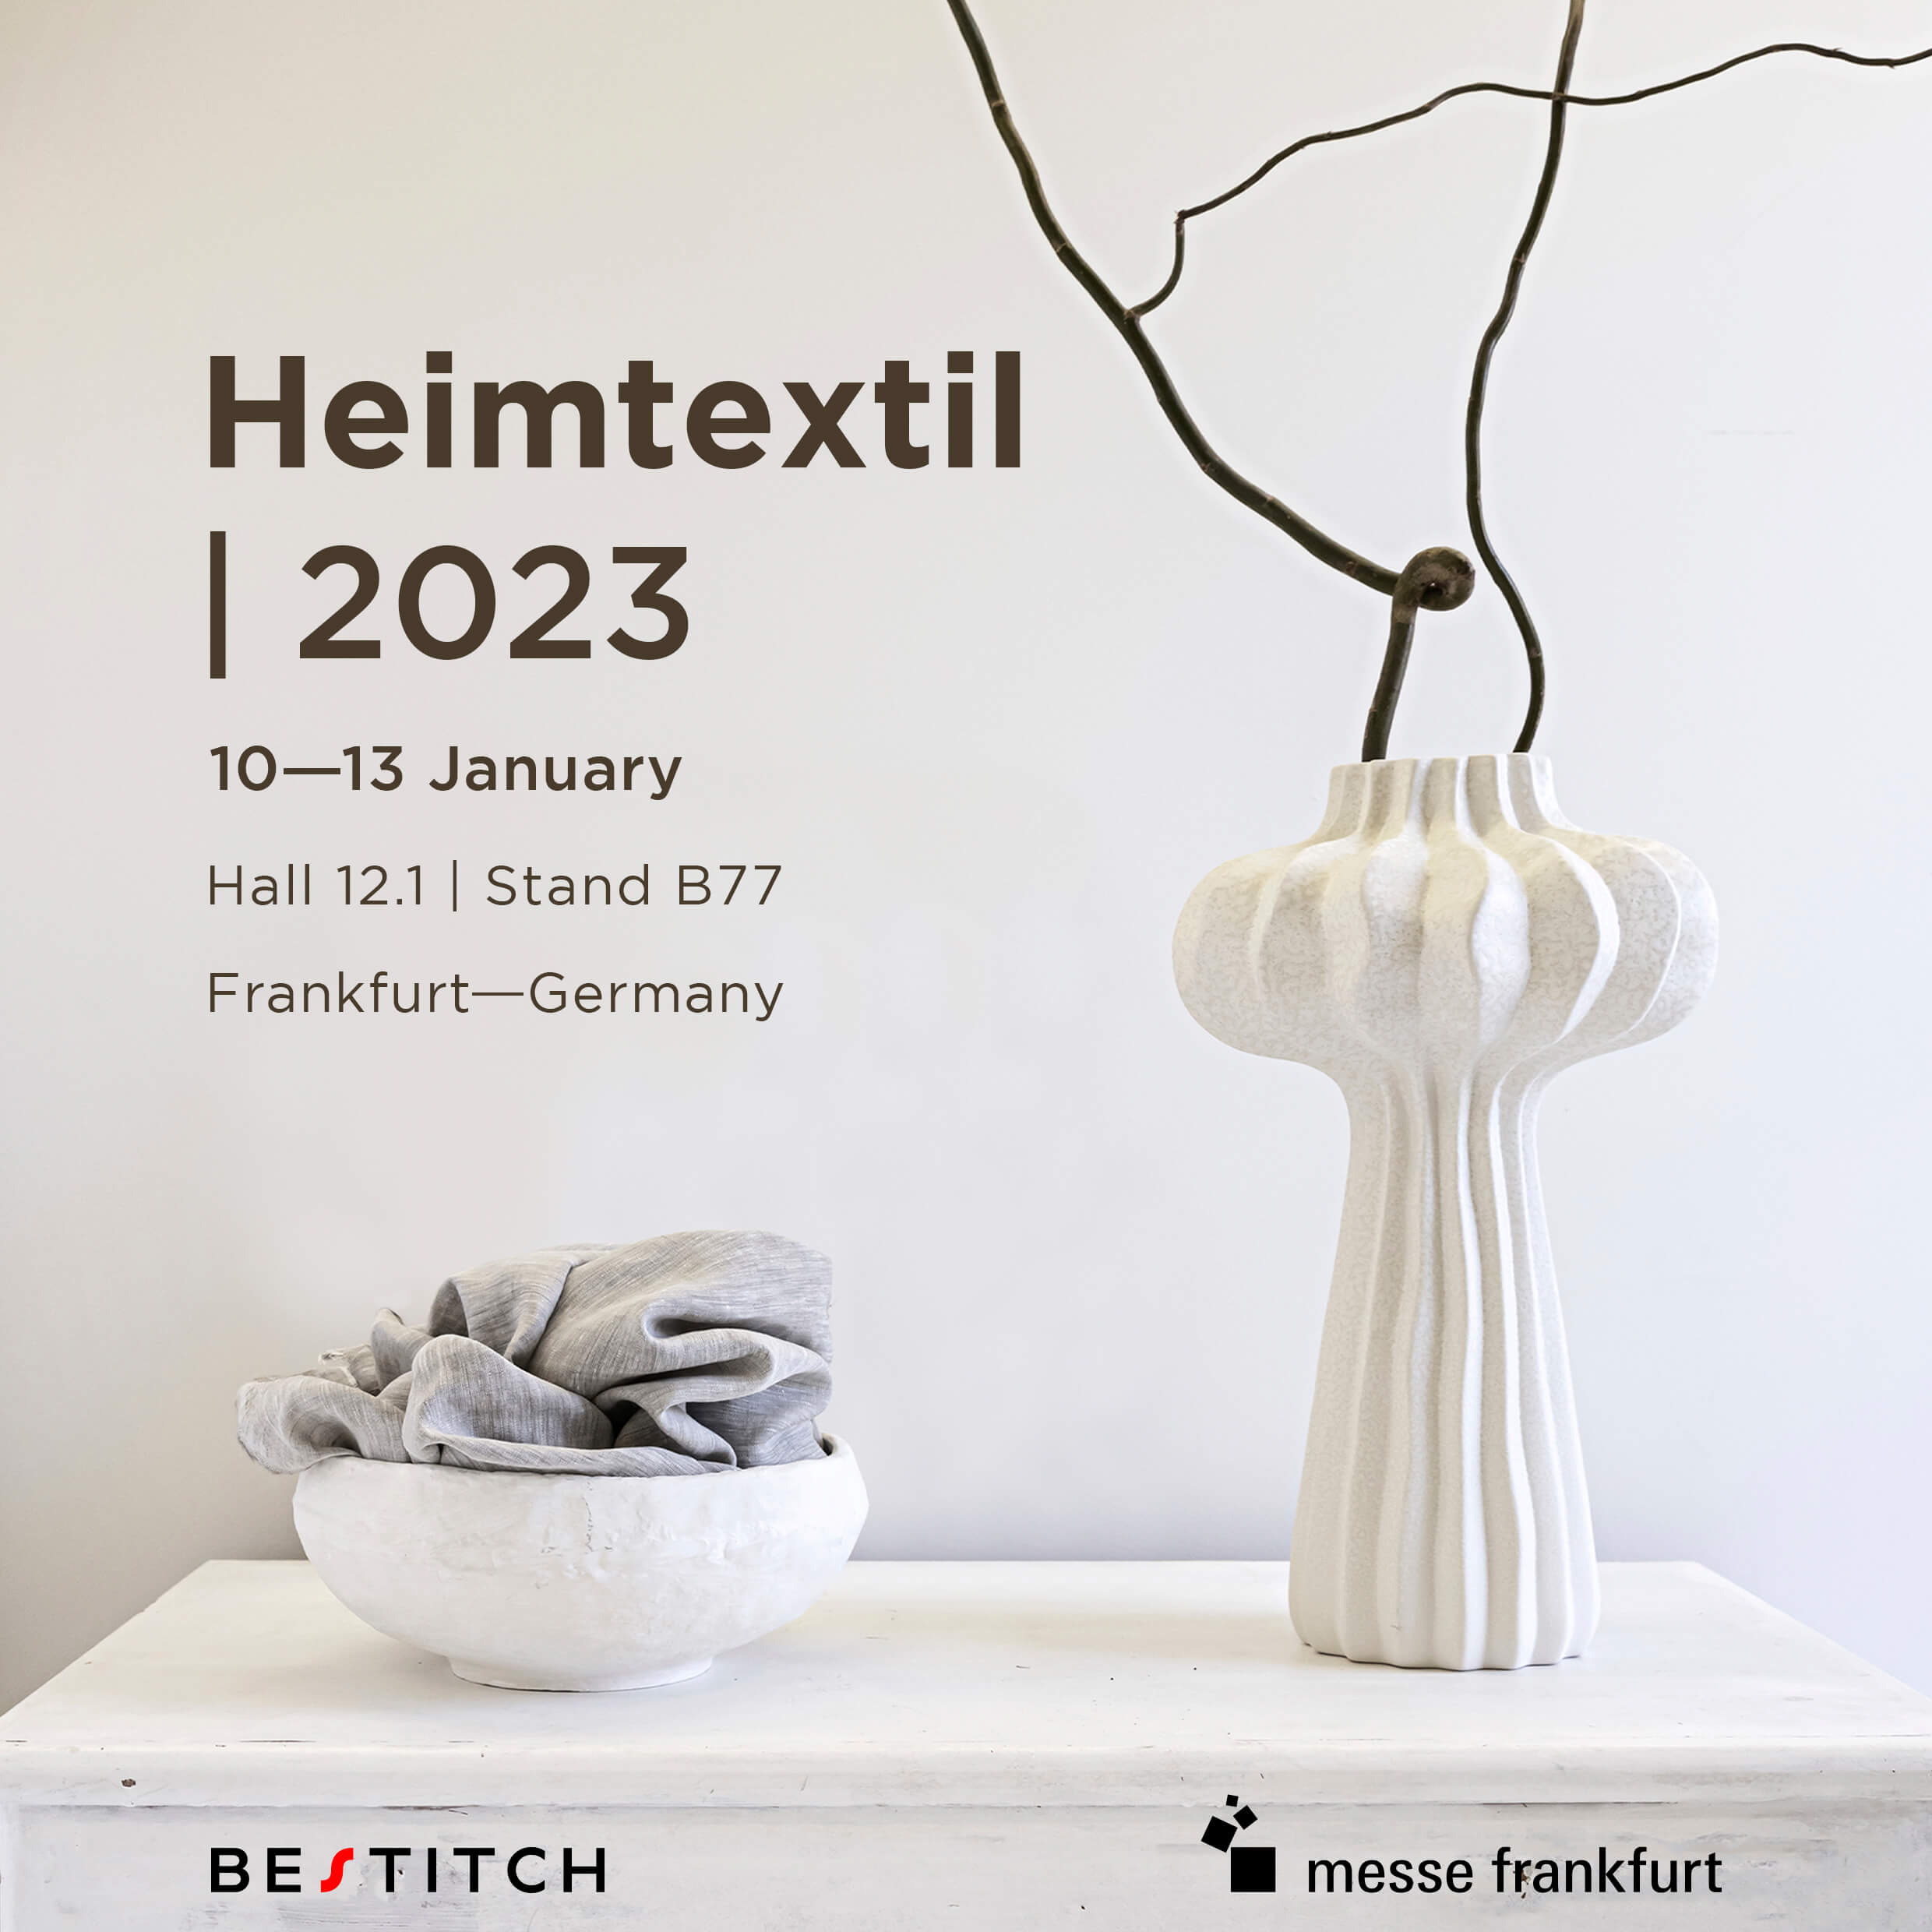 Convite para a Heimtextil 2023 no hall 12.1, stand B77.